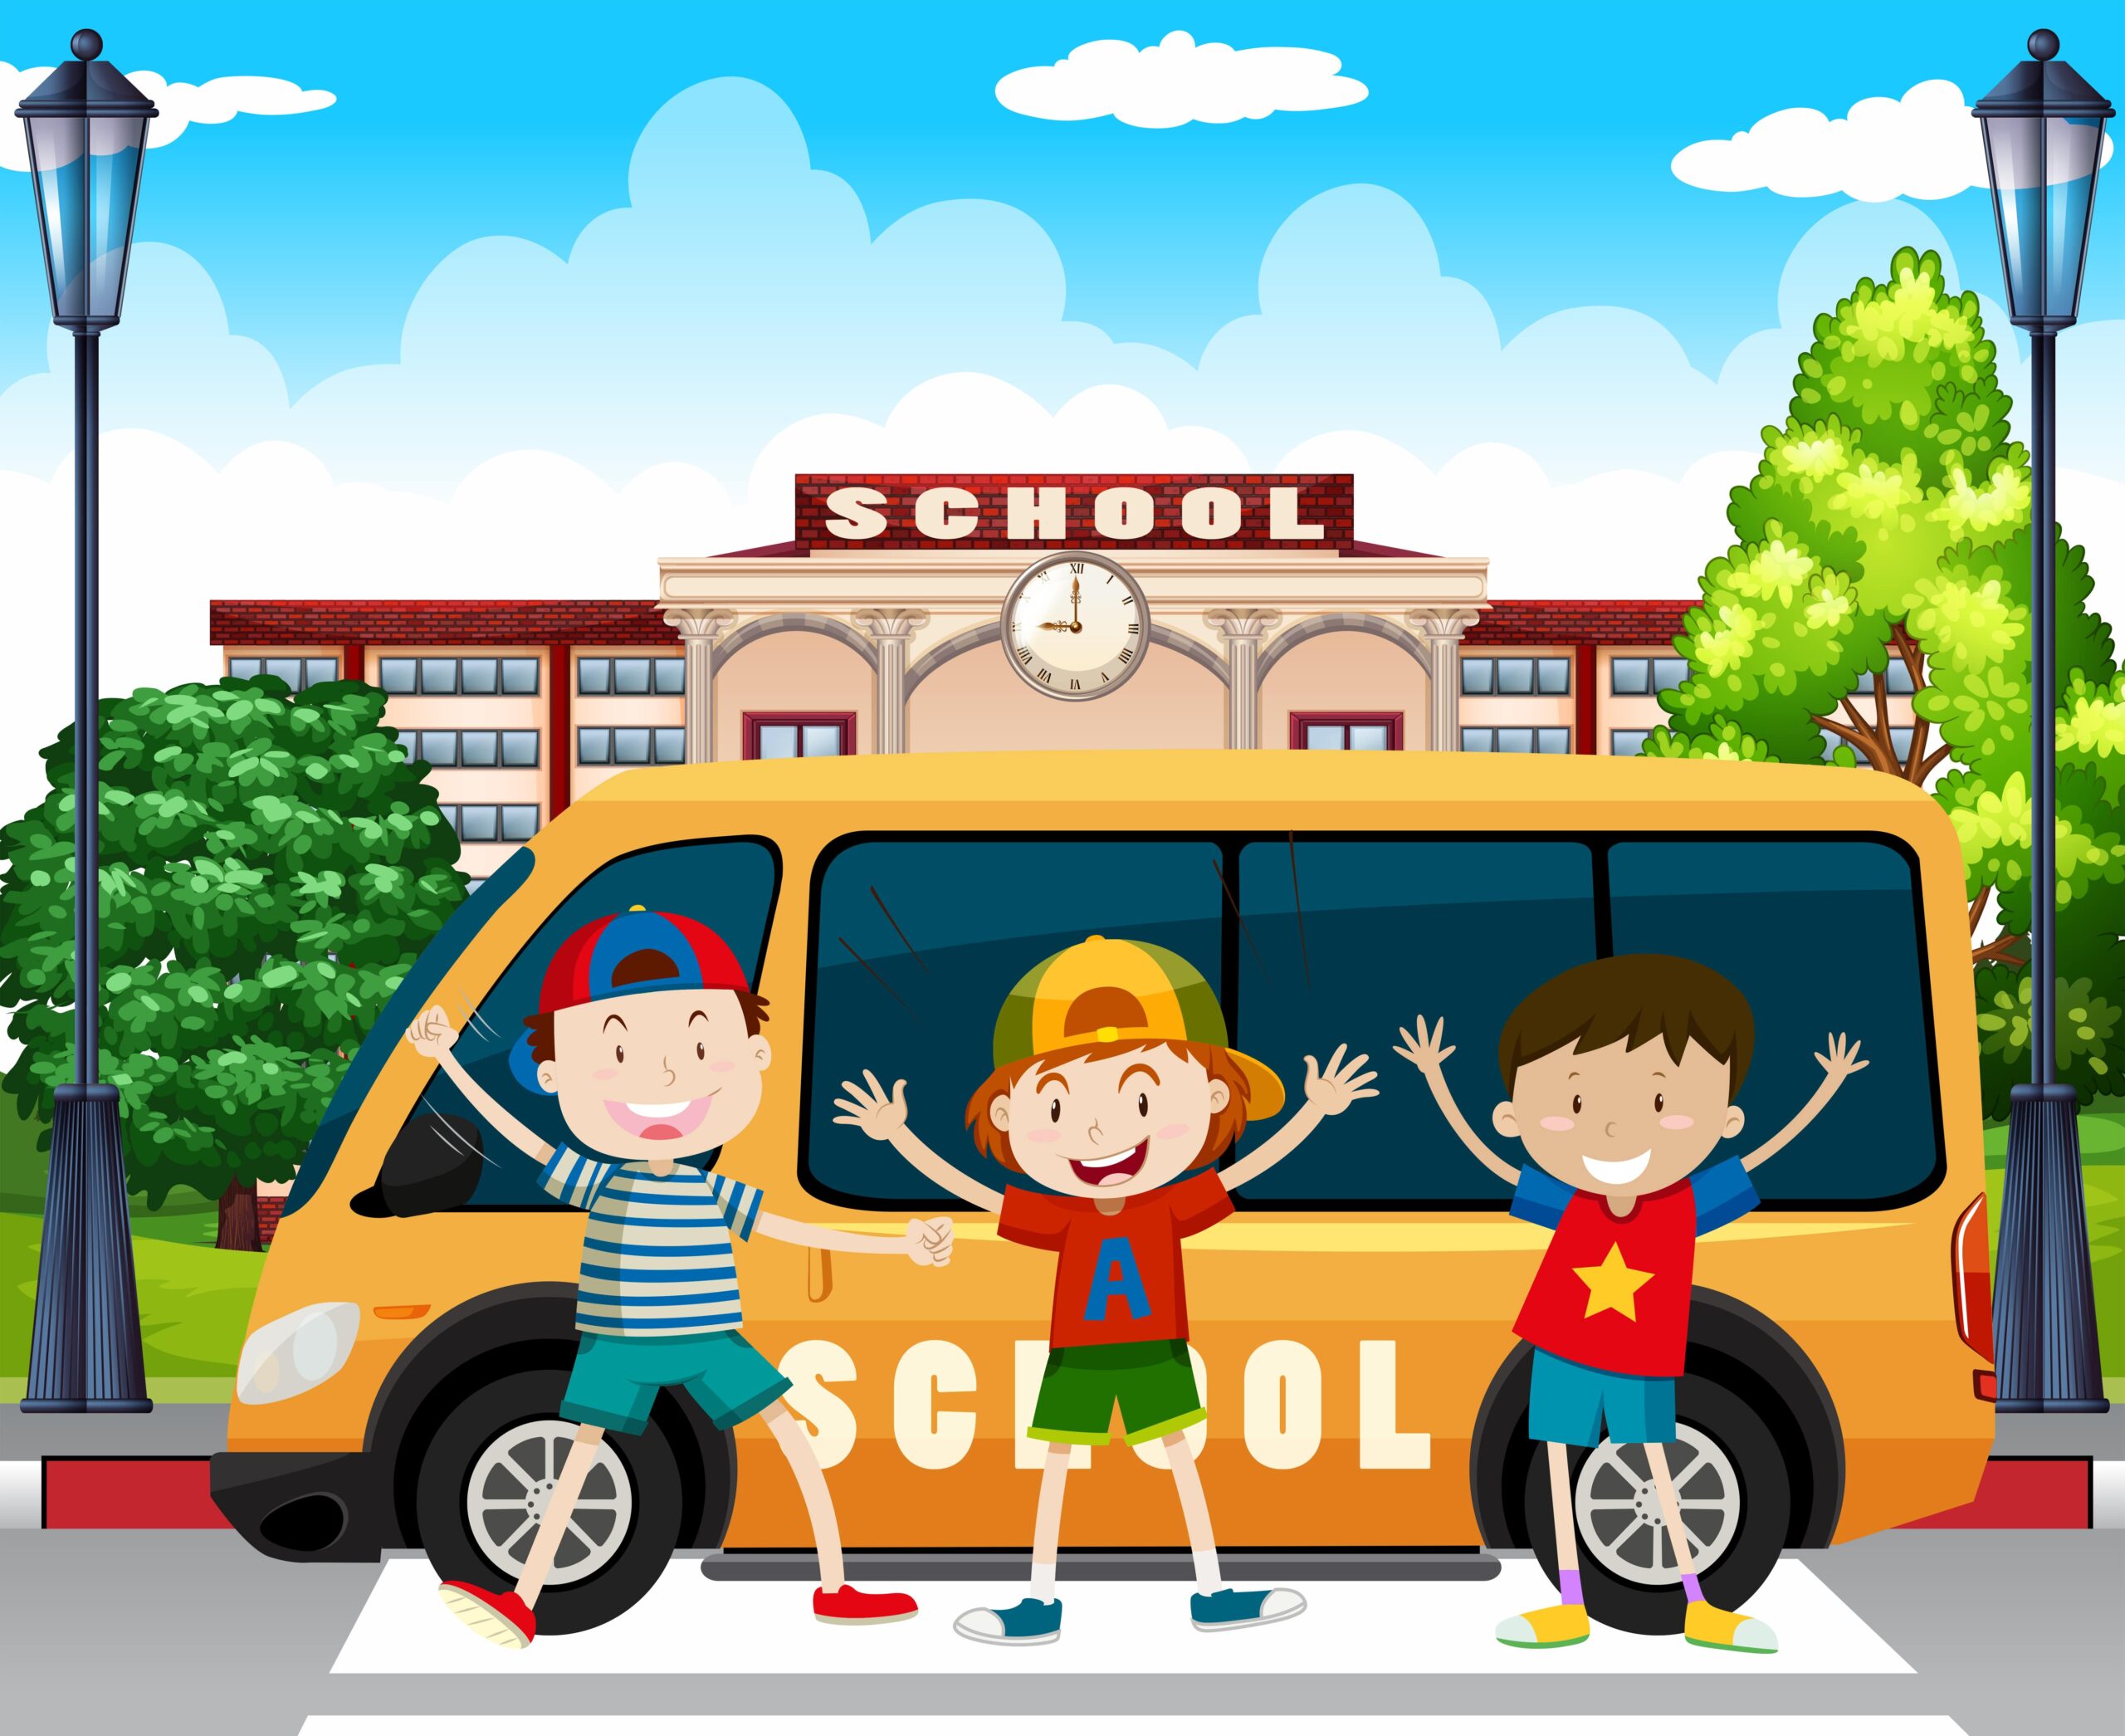 Benefits of School tour for students wanderama